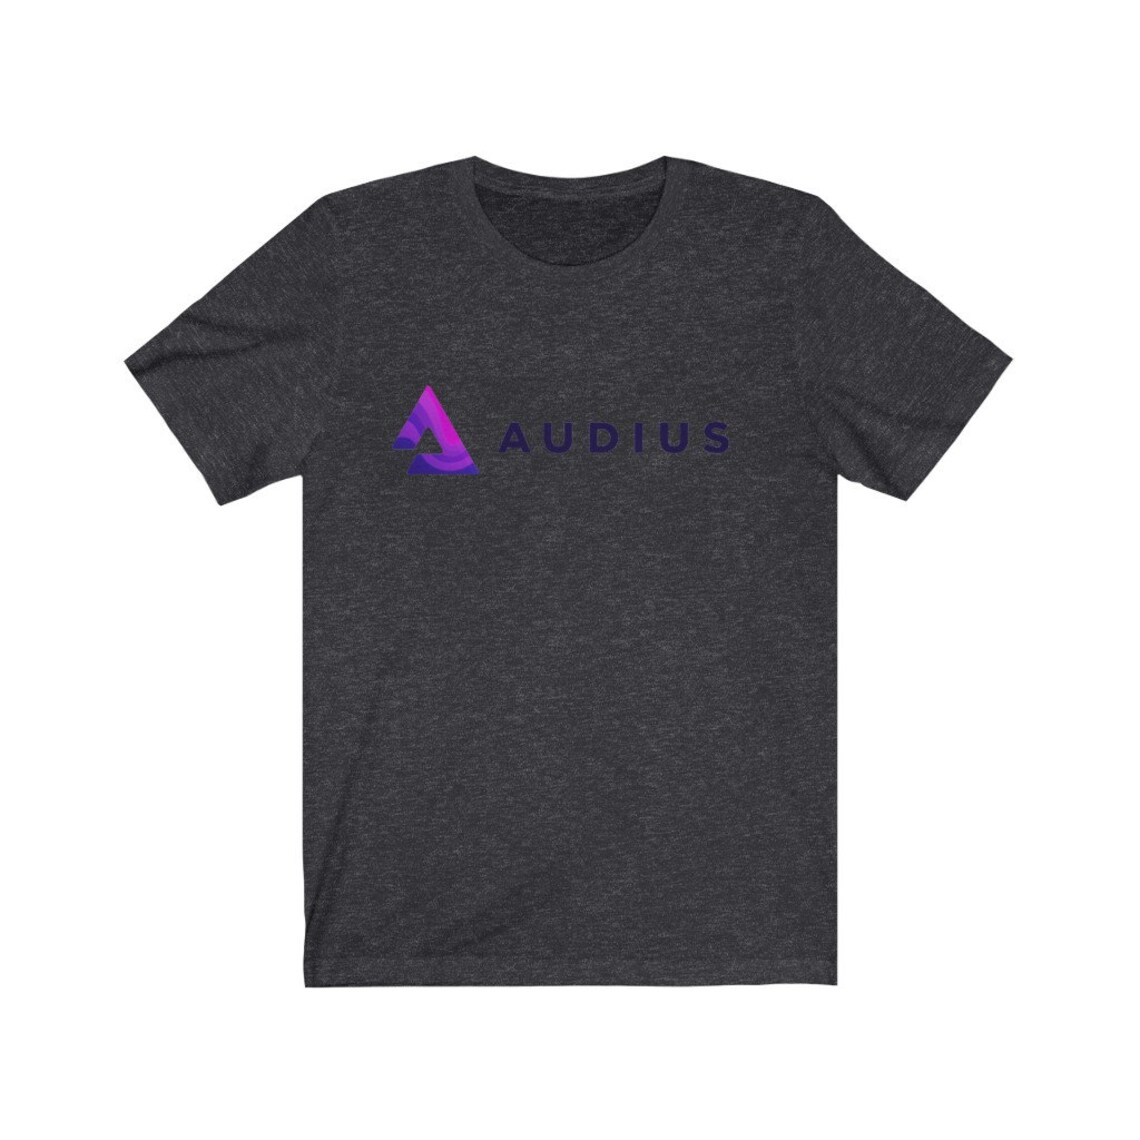 Audius Shirt Crypto Shirt Web3 Music T Shirt | Etsy